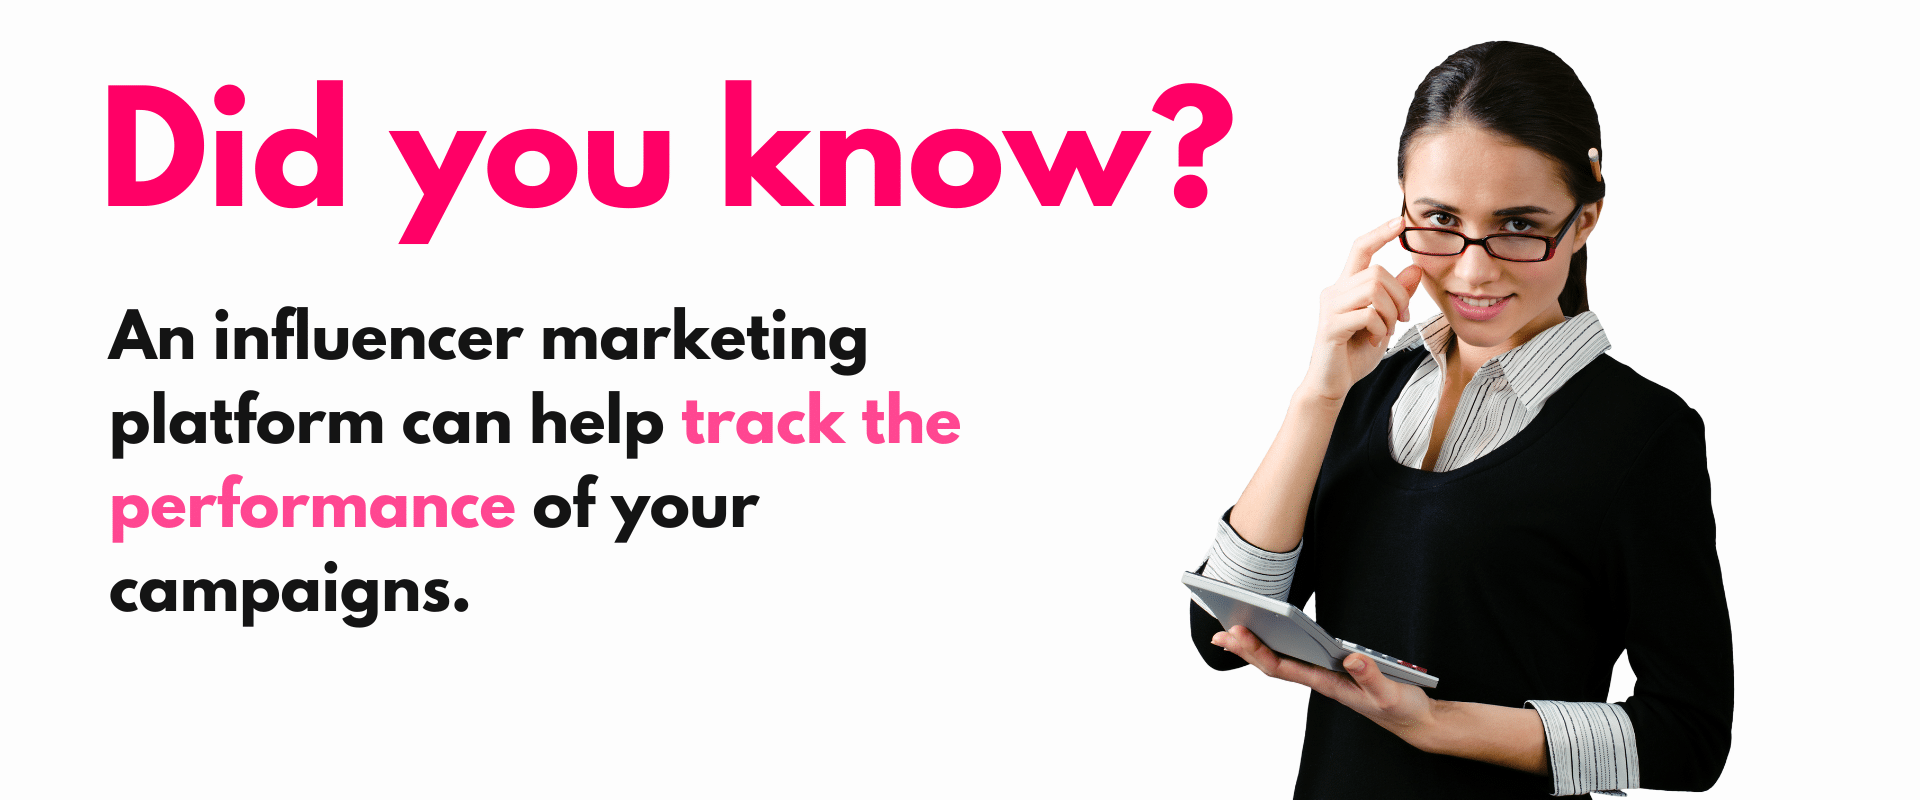 How to track influencer marketing